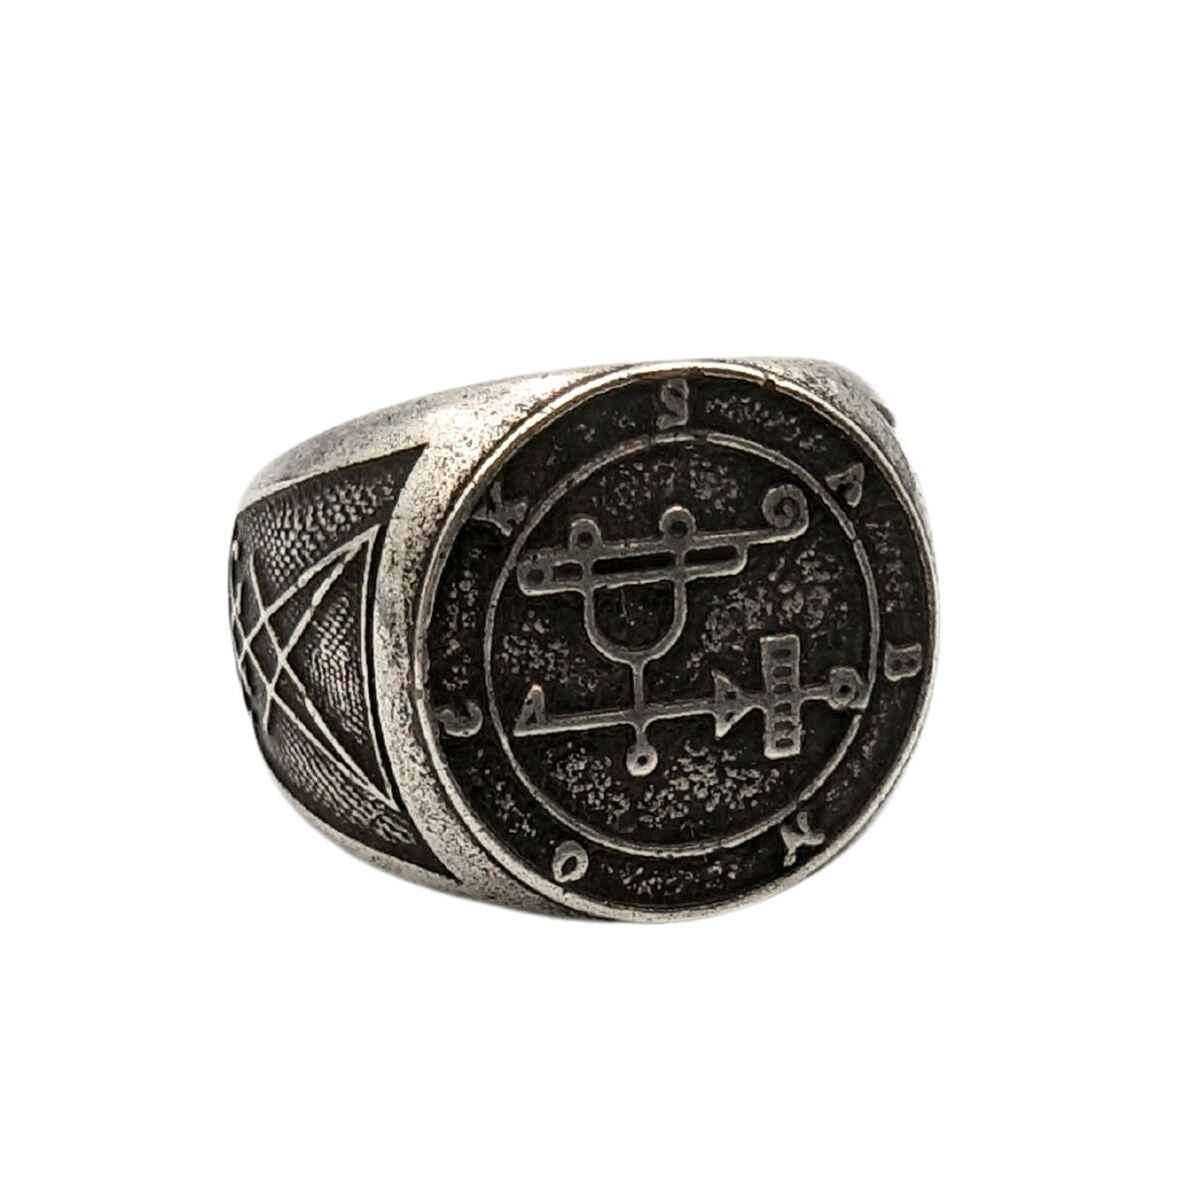 Sabnock sigil ring from bronze   